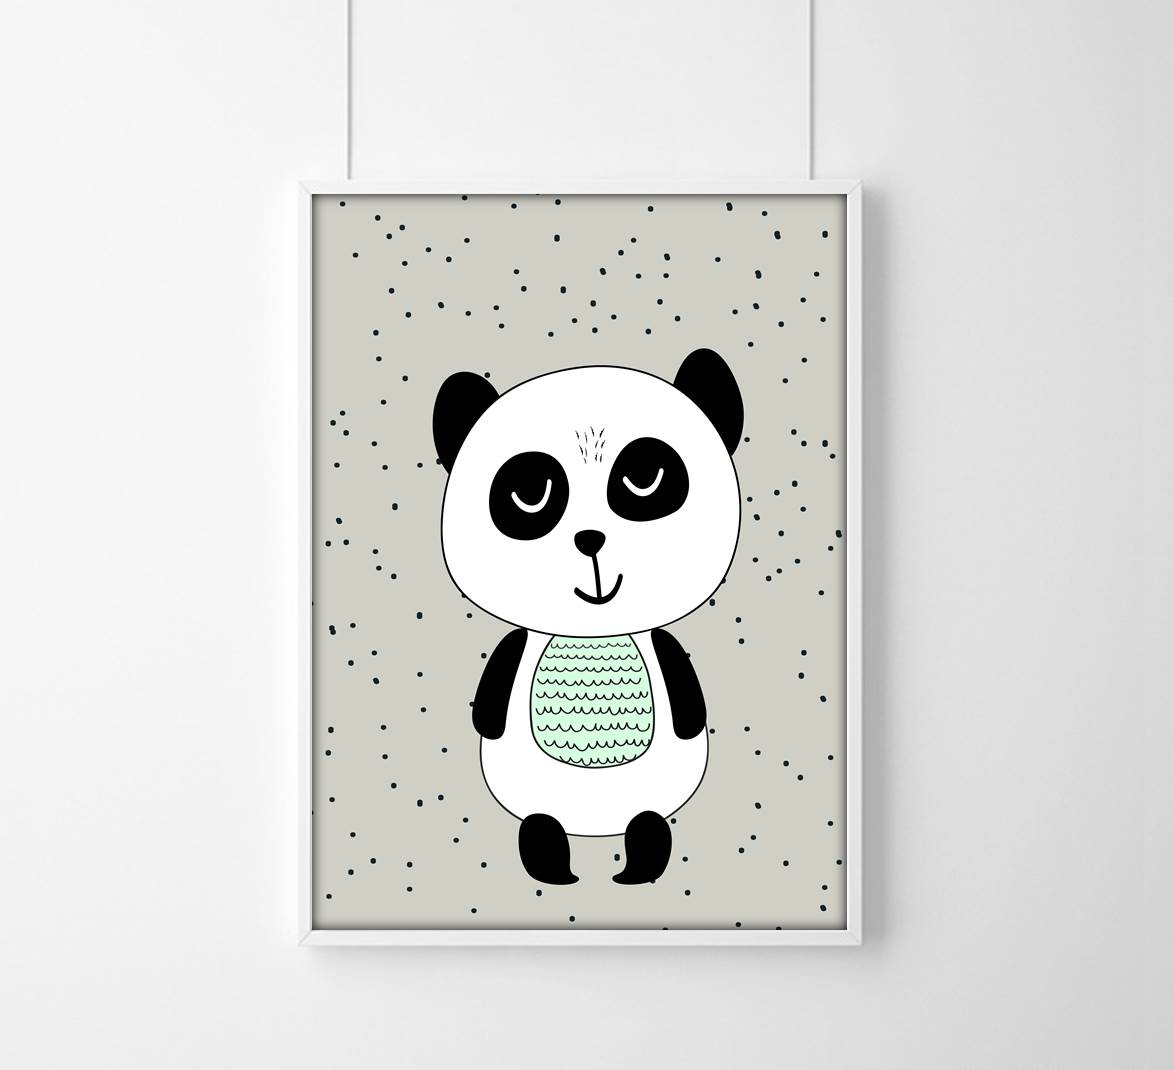 Plakat do pokoju dziecka panda